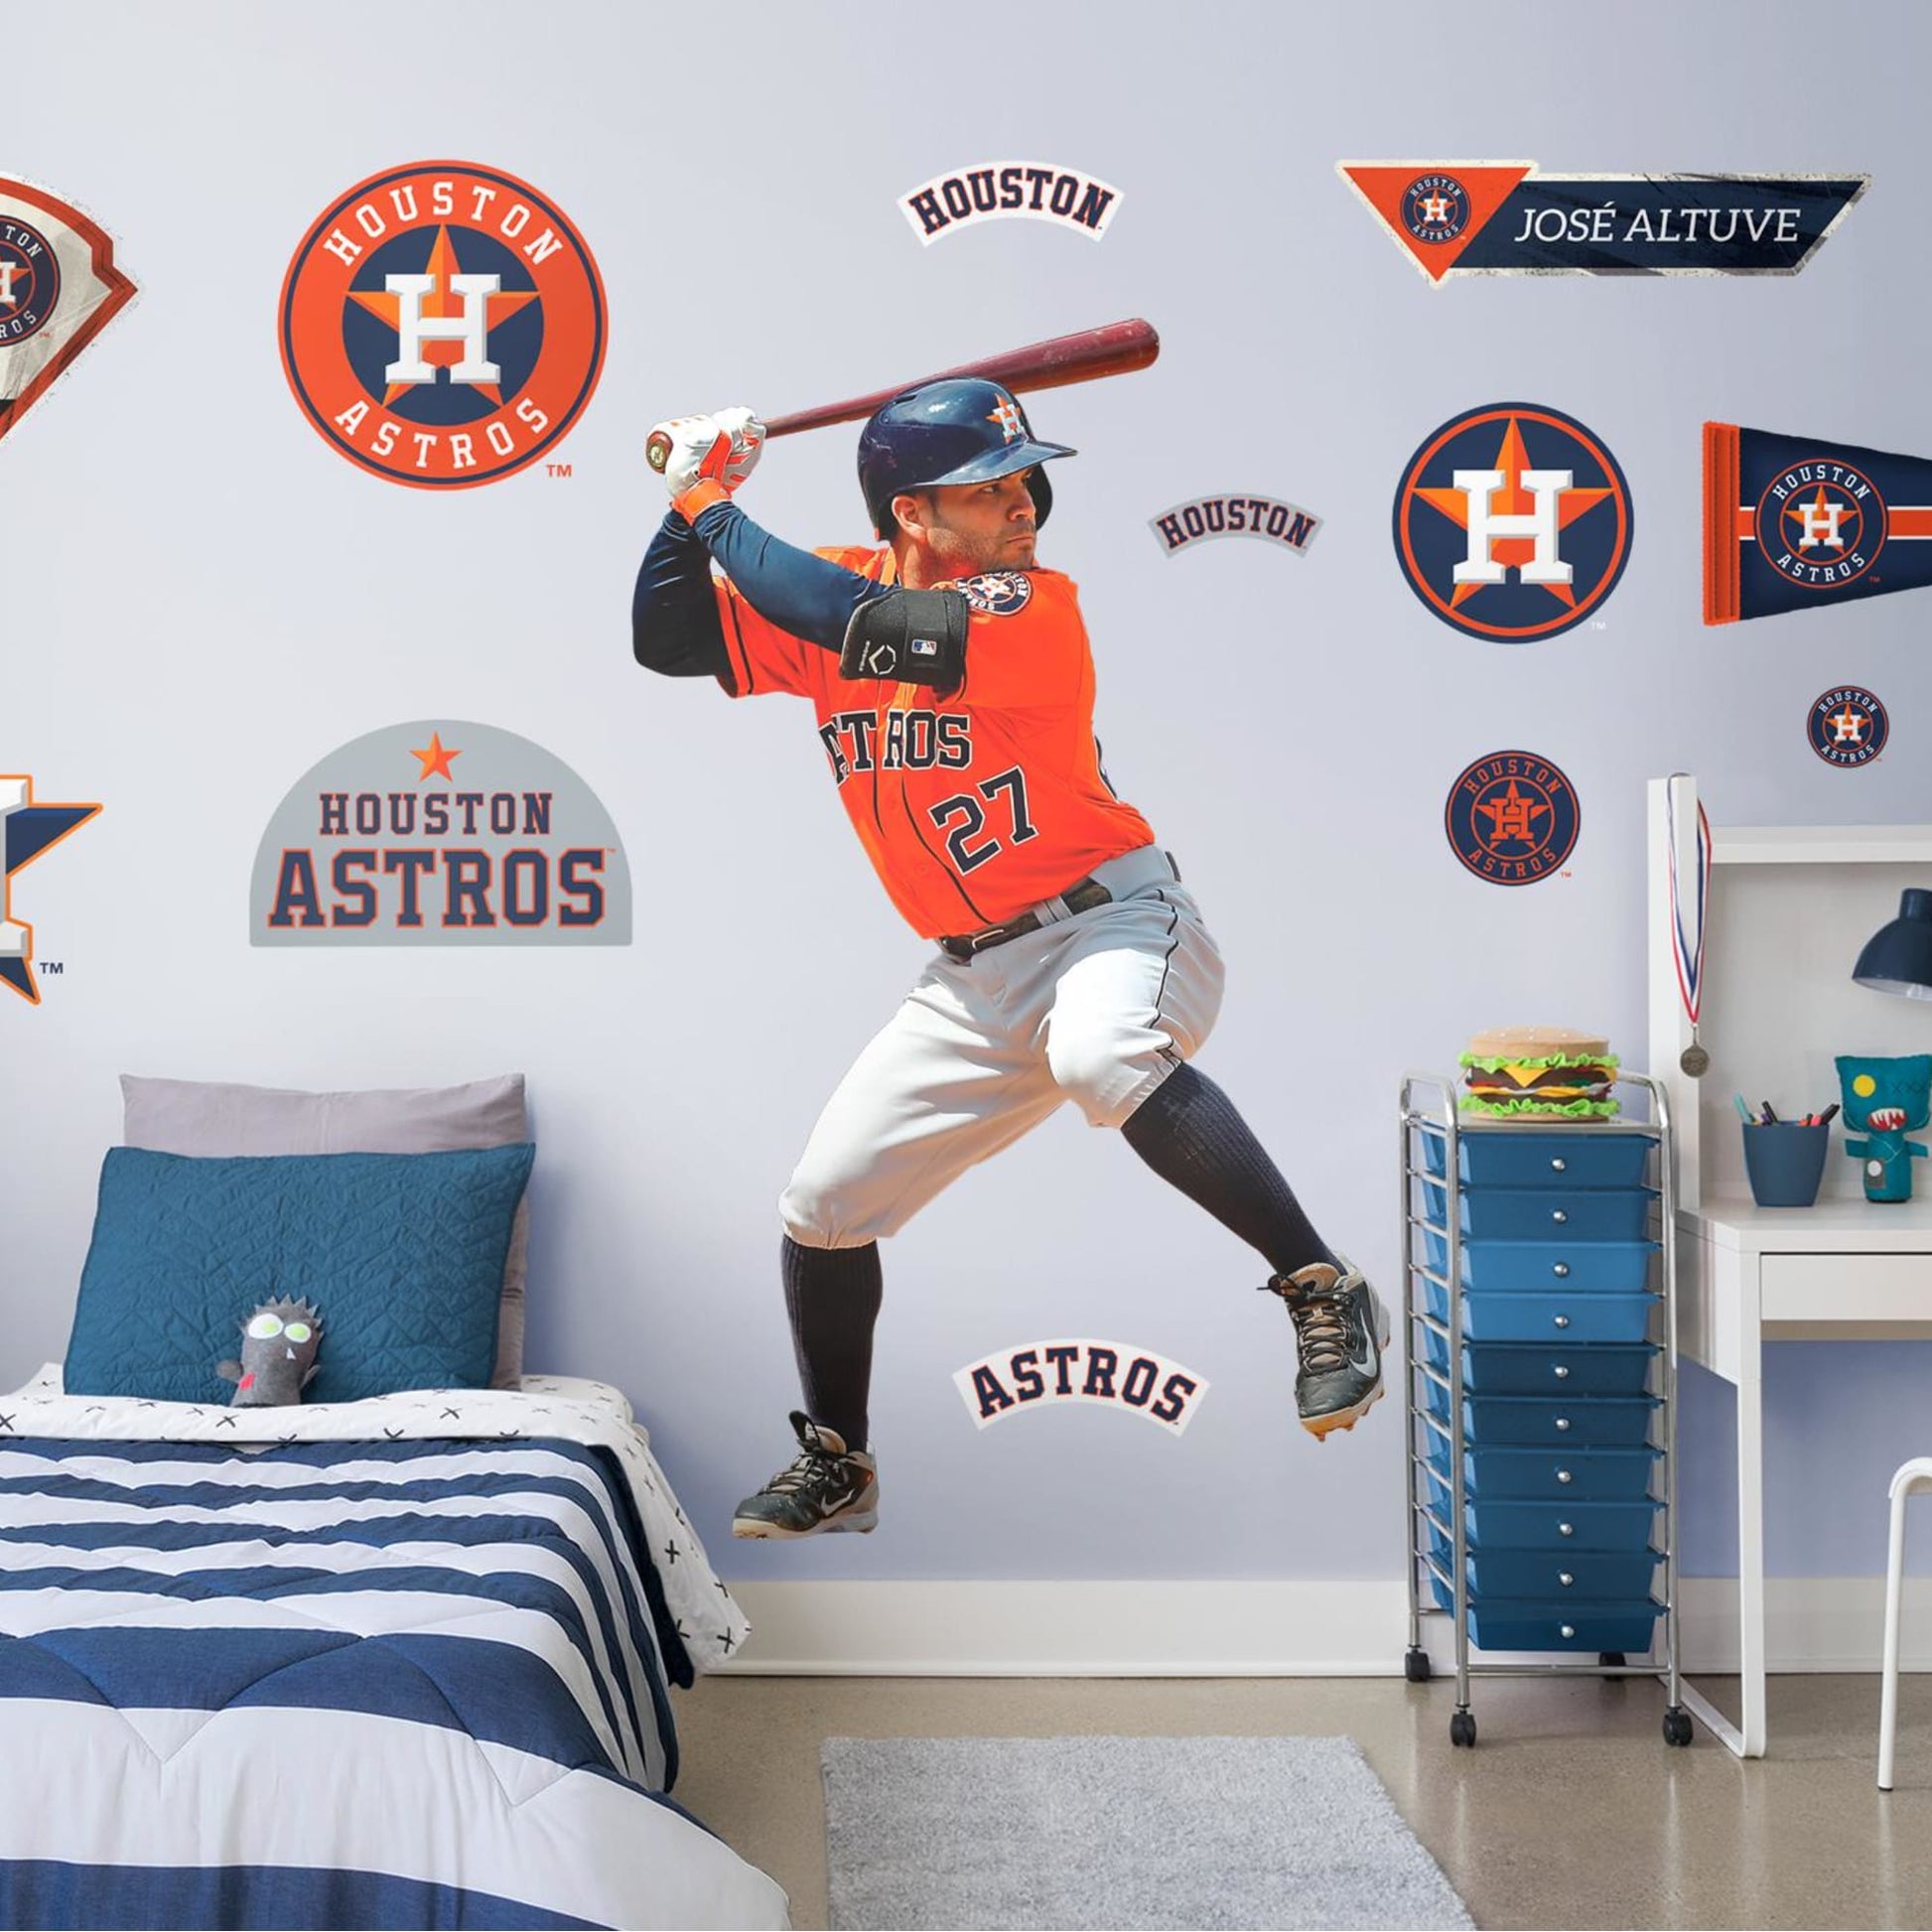 José Altuve Houston Astros Poster Wall Art Sports Poster 